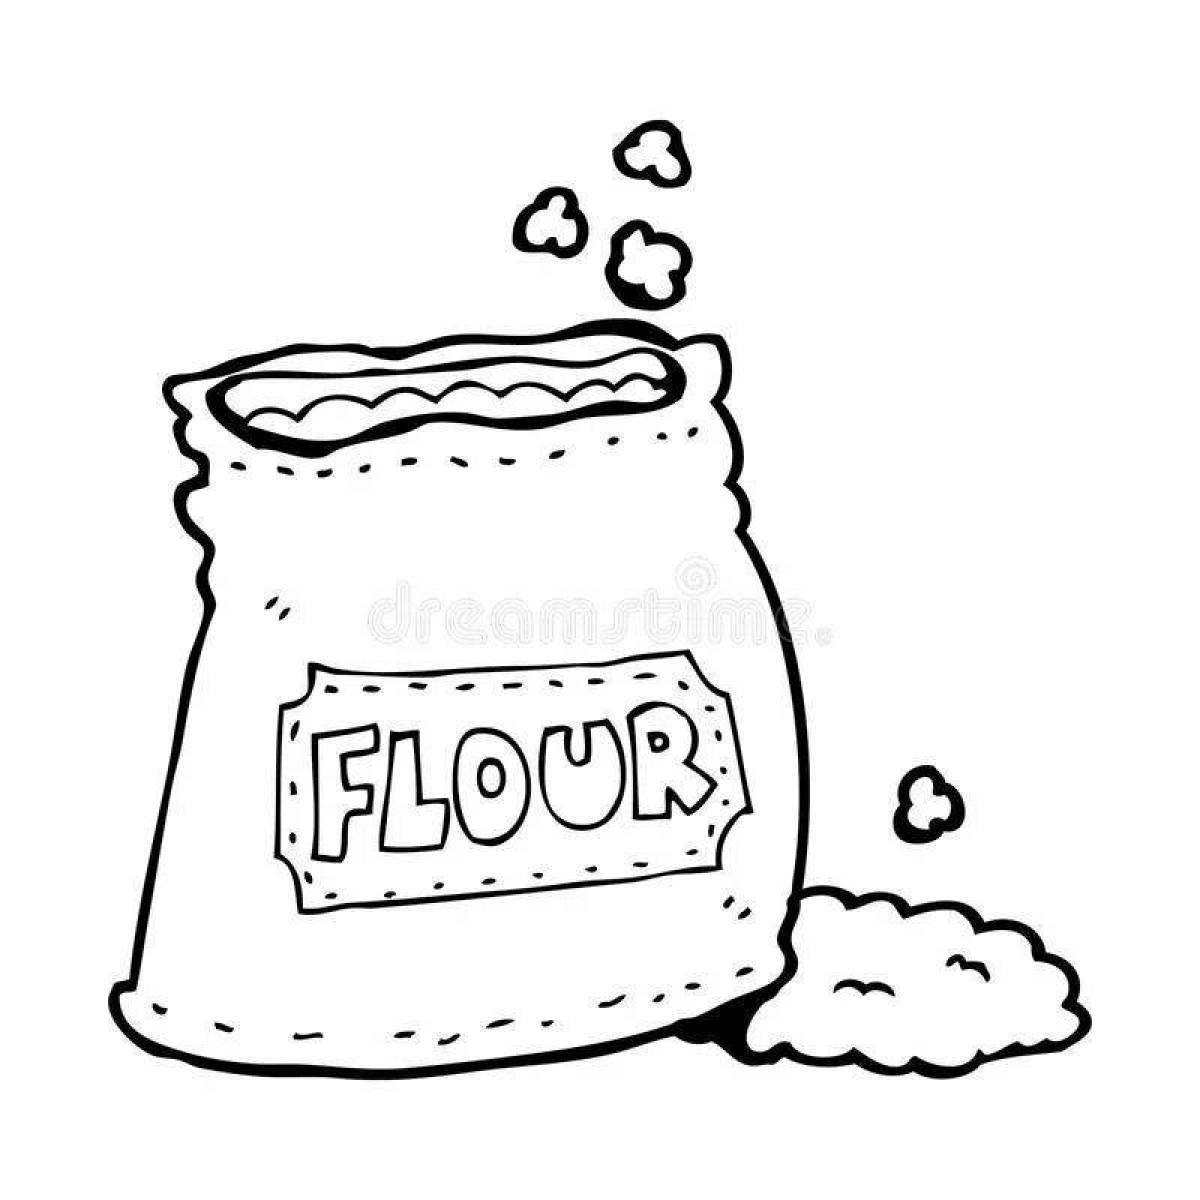 Humorous coloring flour